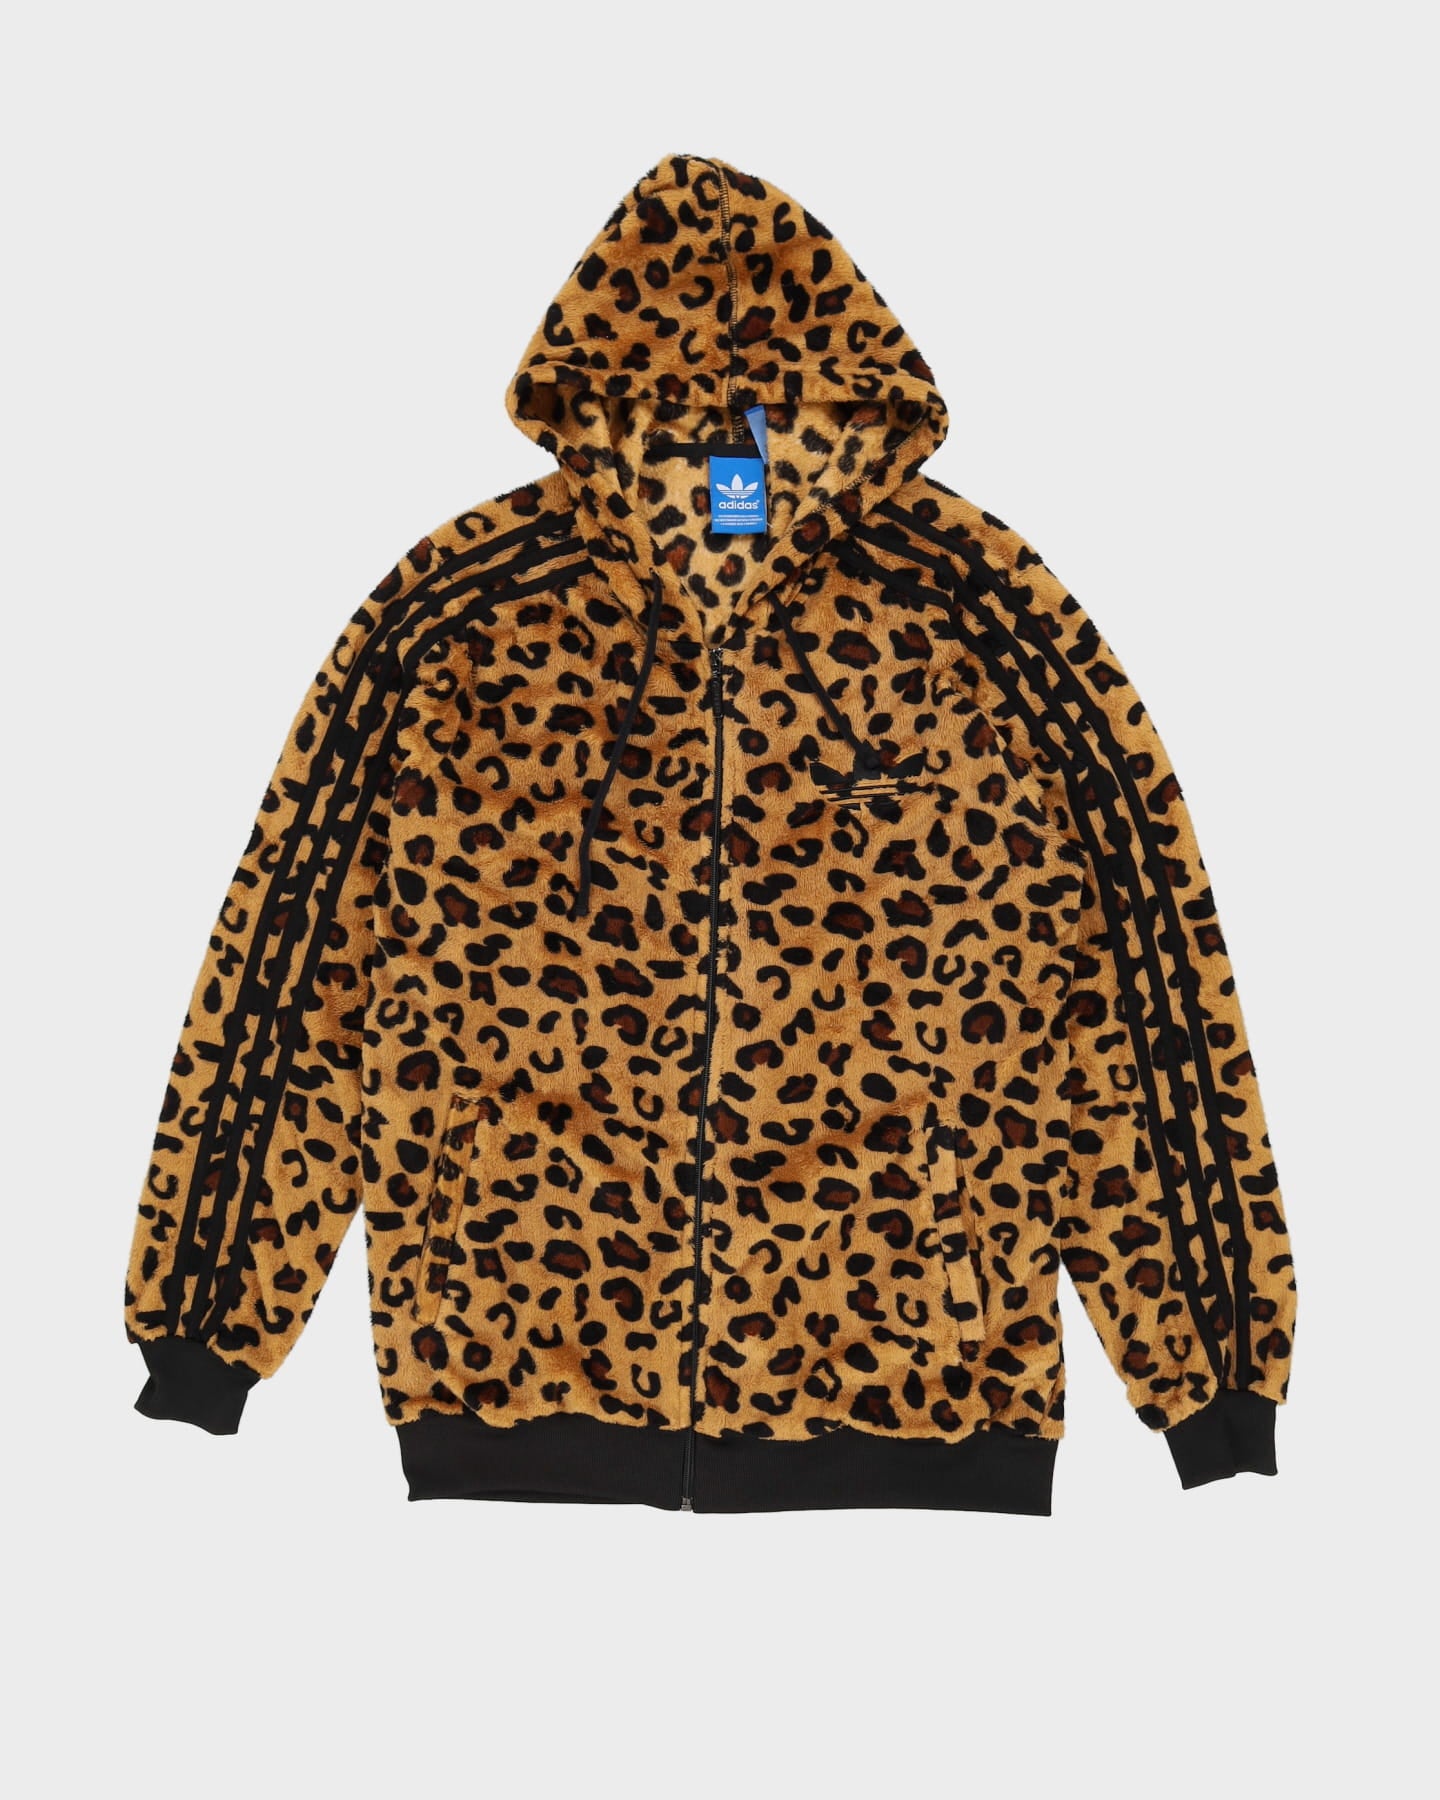 Adidas Leopard Print Full-Zip Hooded Sweatshirt / Fleece - L